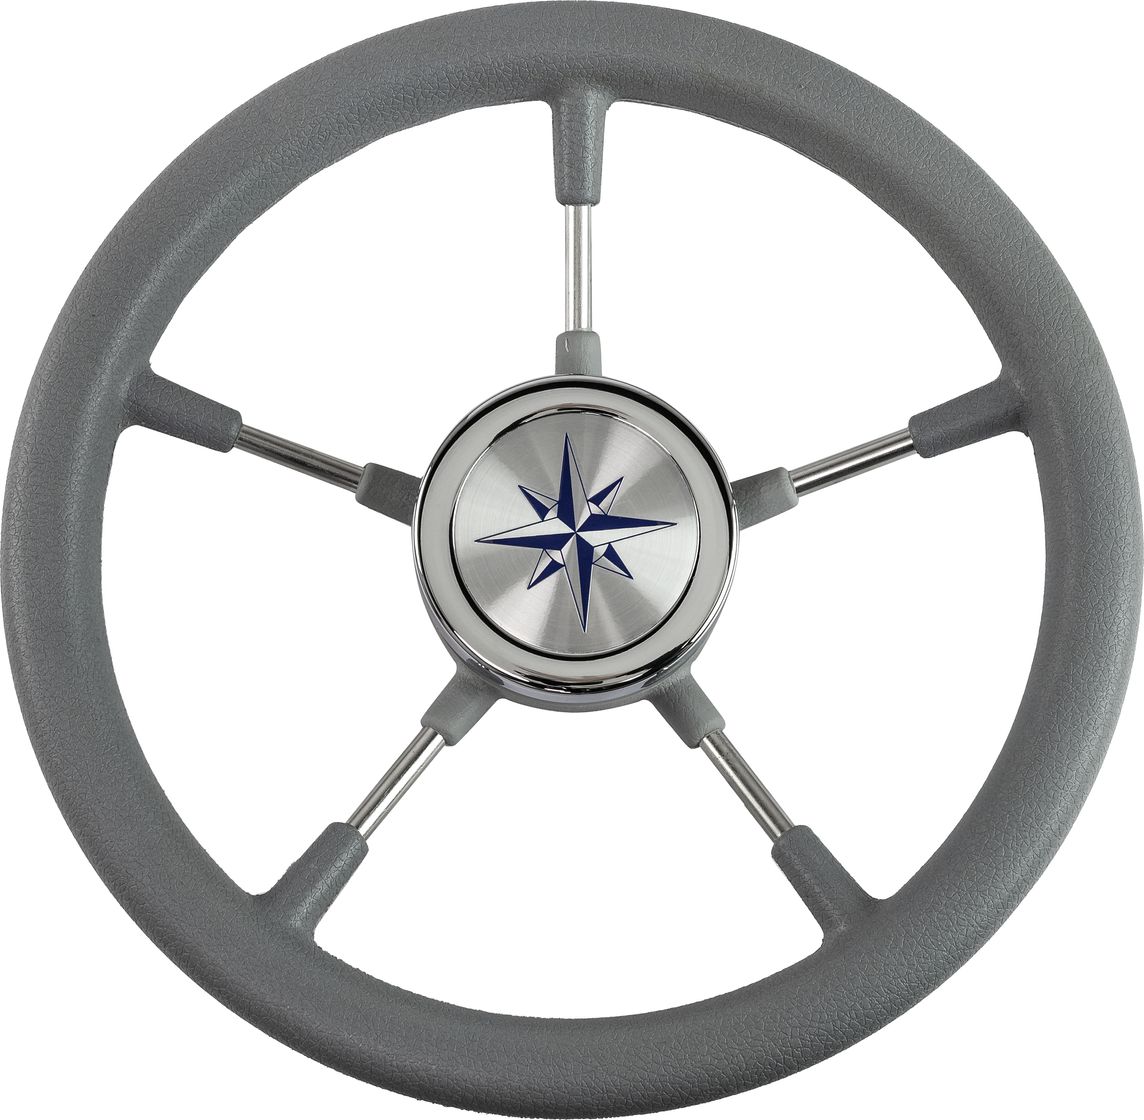 Рулевое колесо RIVA RSL обод серый, спицы серебряные д. 320 мм VN732022-03 рулевое колесо delfino обод спицы серебряные д 310 мм vn70103 01